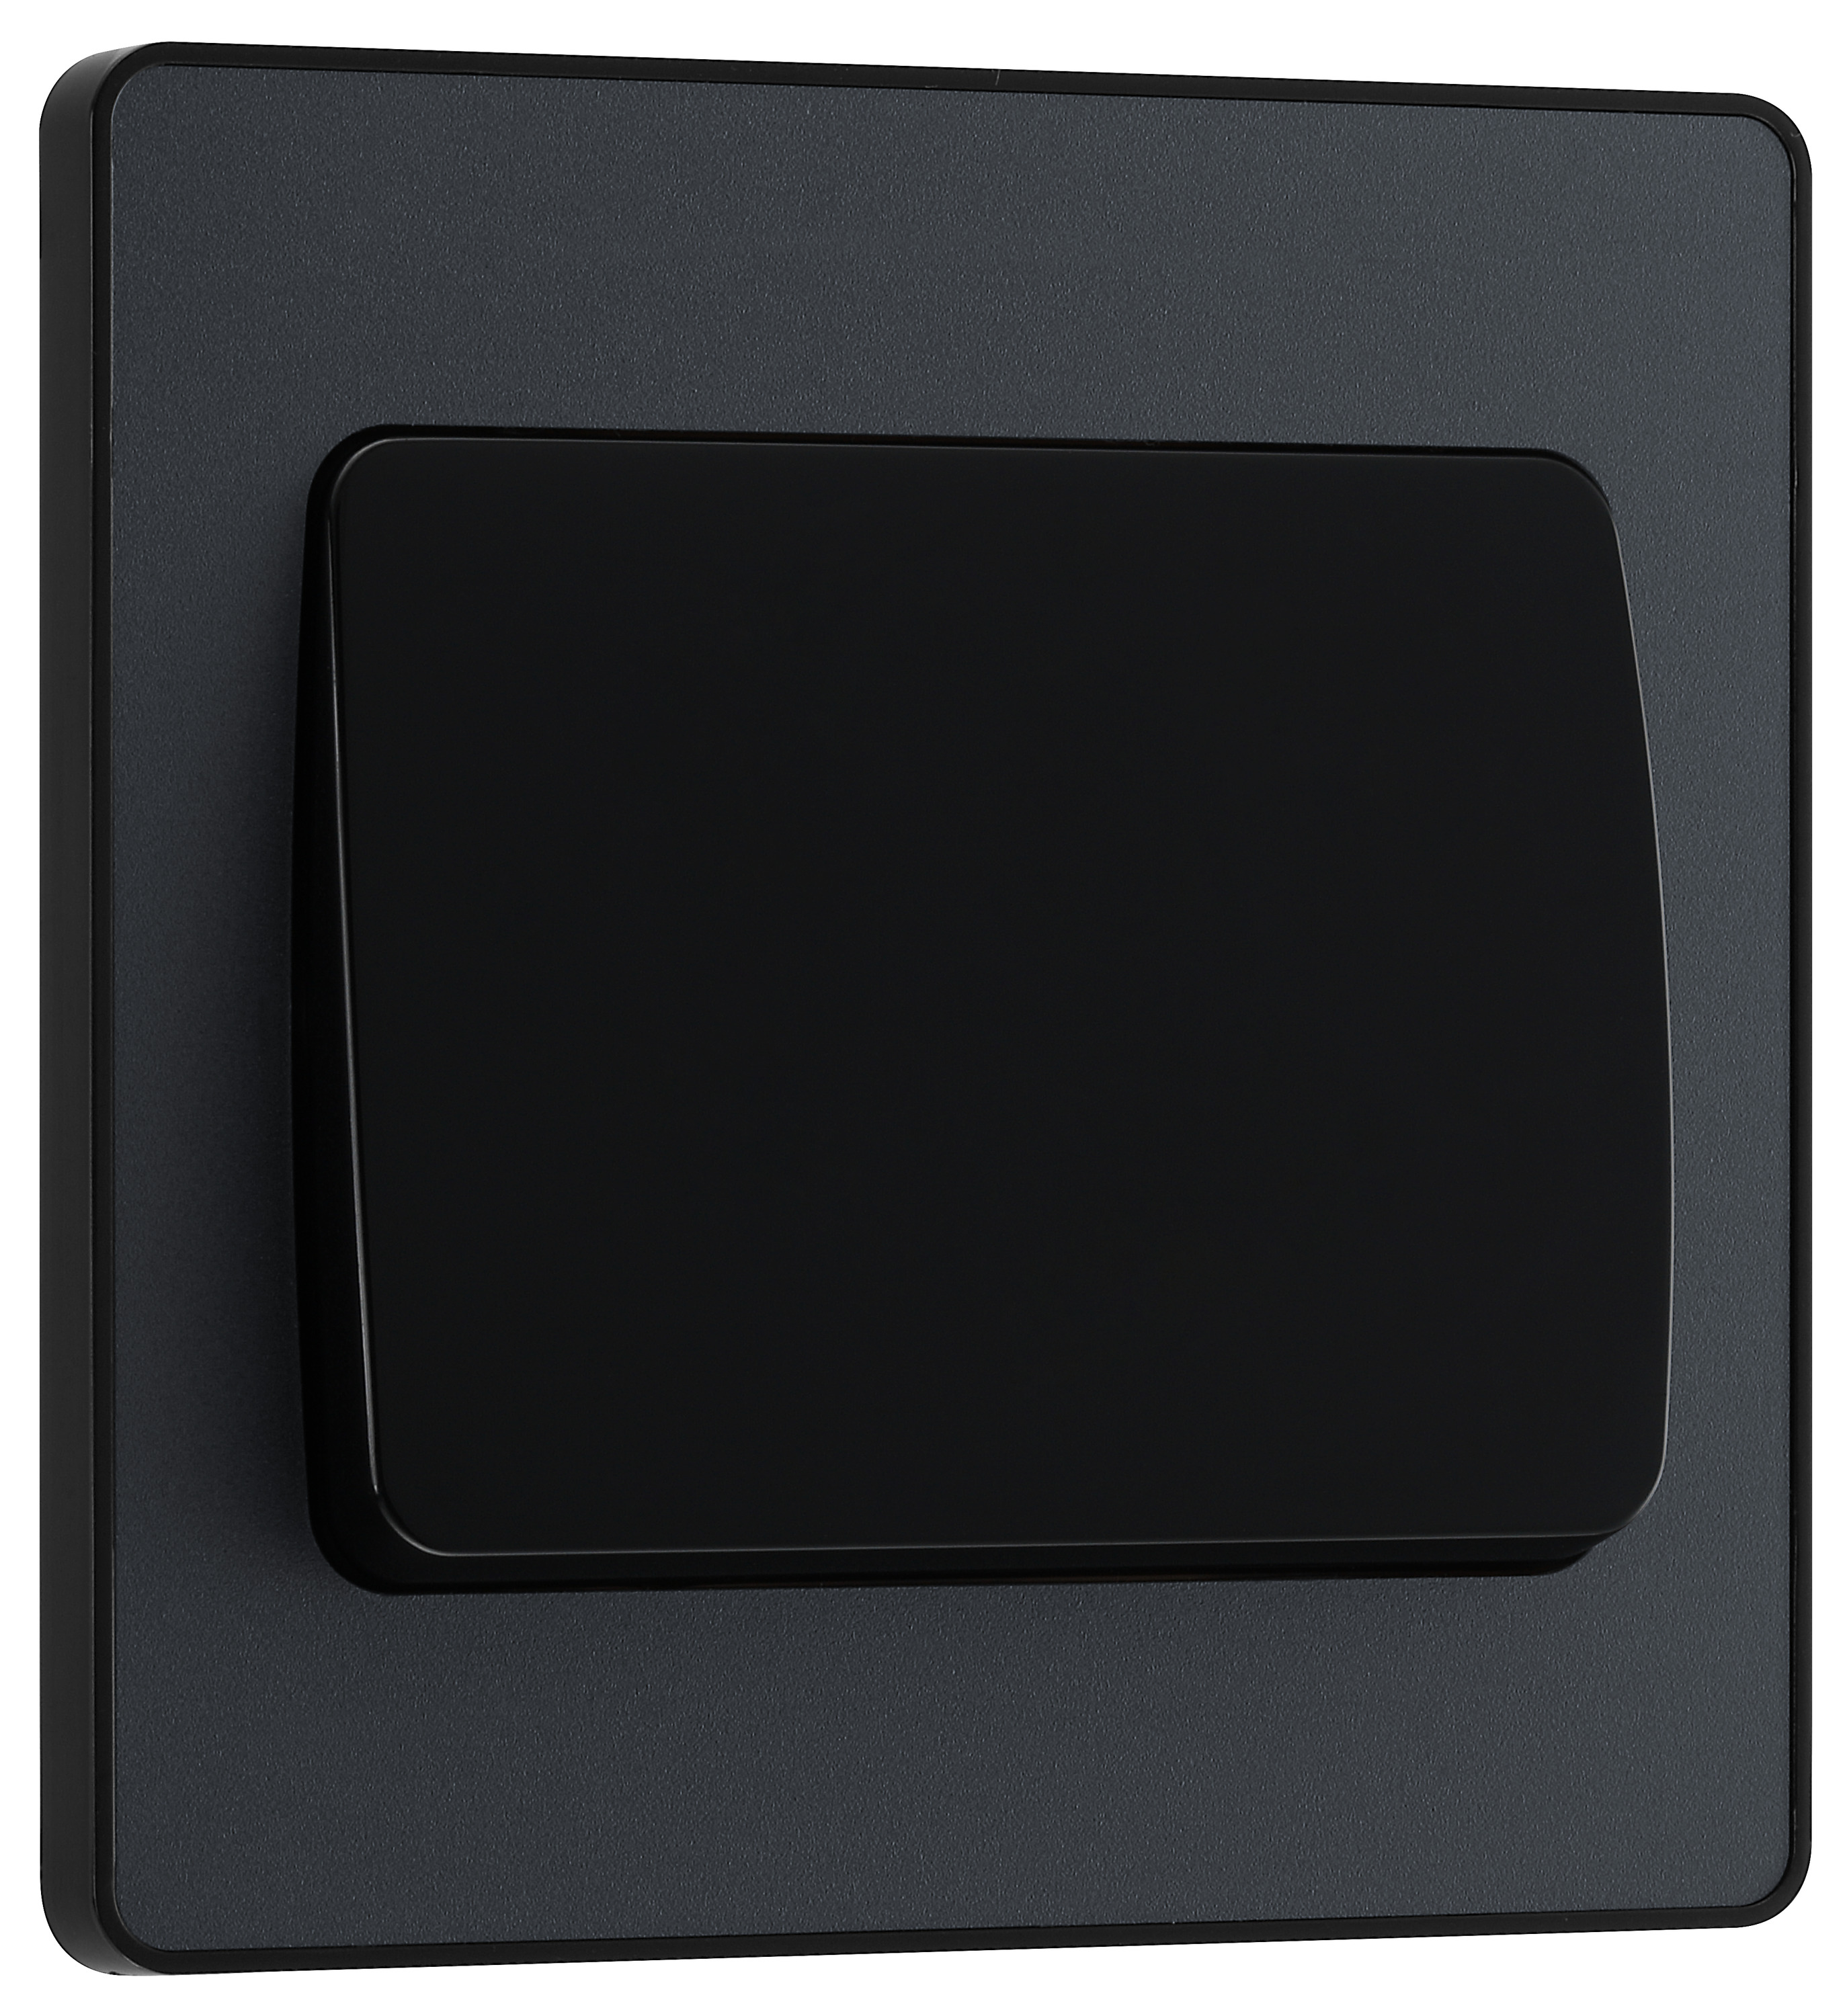 Image of BG Evolve Matt Grey 20A 16Ax Single Wide Rocker Light Switch - 2 Way